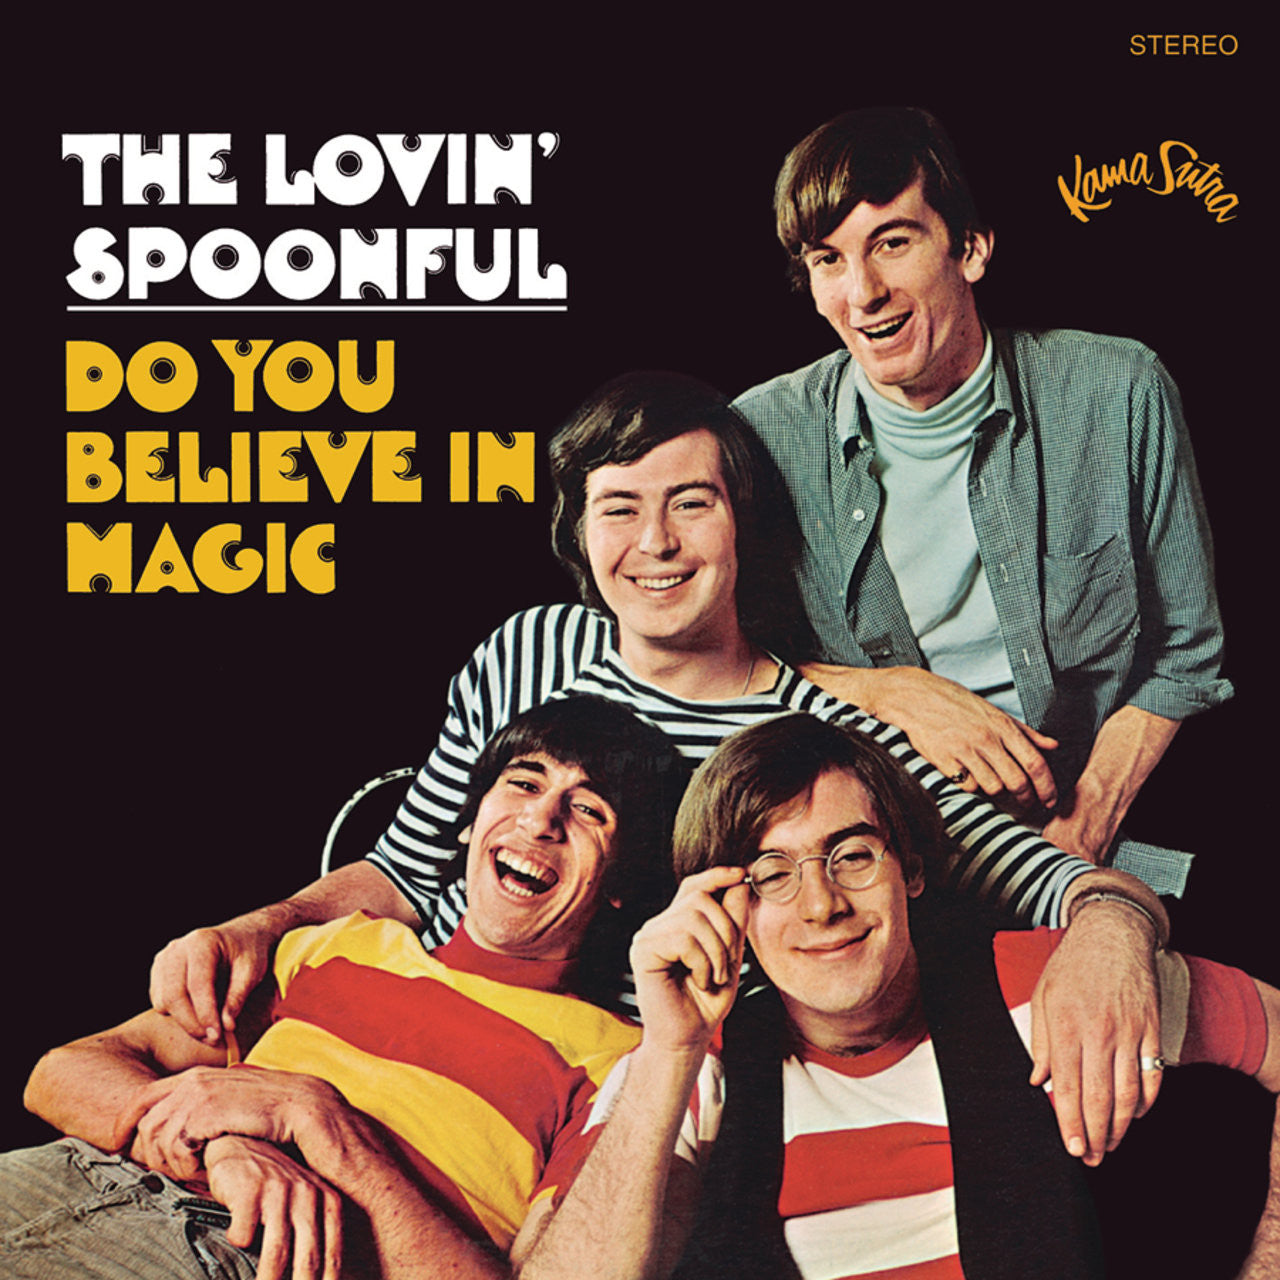 THE LOVIN' SPOONFUL 'DO YOU BELIEVE IN MAGIC' LP